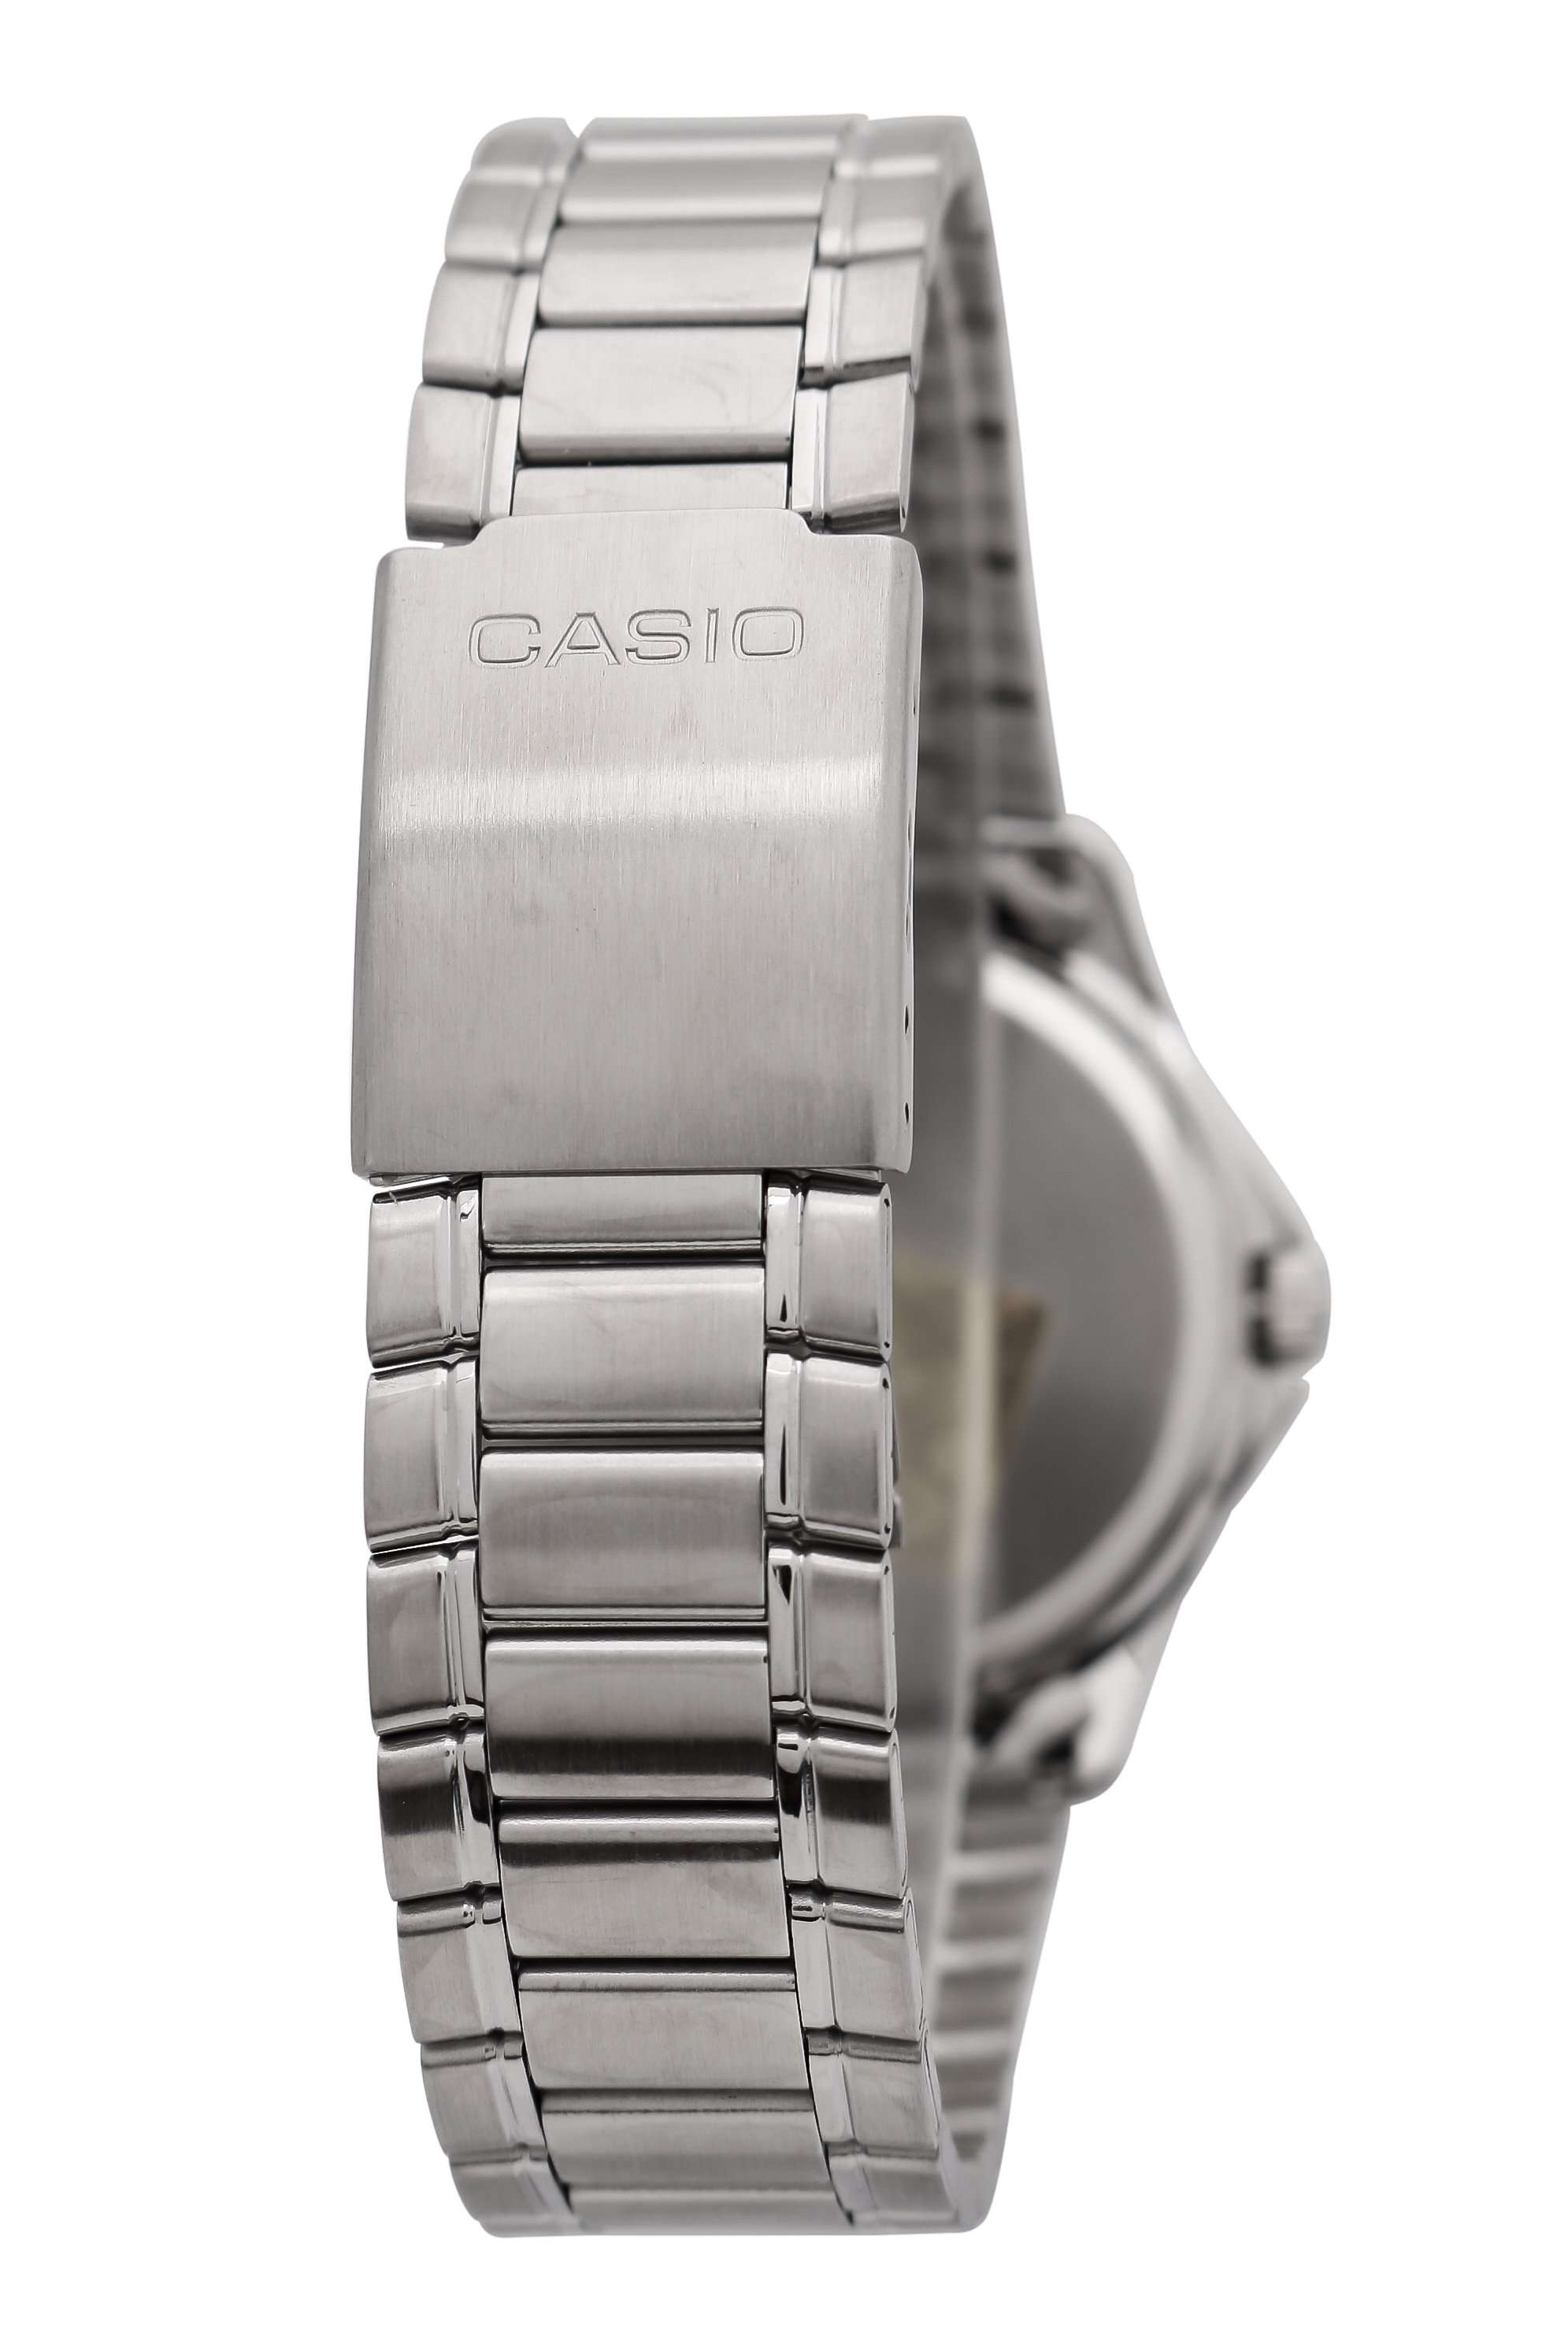 Casio Men's Silver Stainless Steel Strap Watch- MTP-1183A-1ADF-Watch Portal Philippines